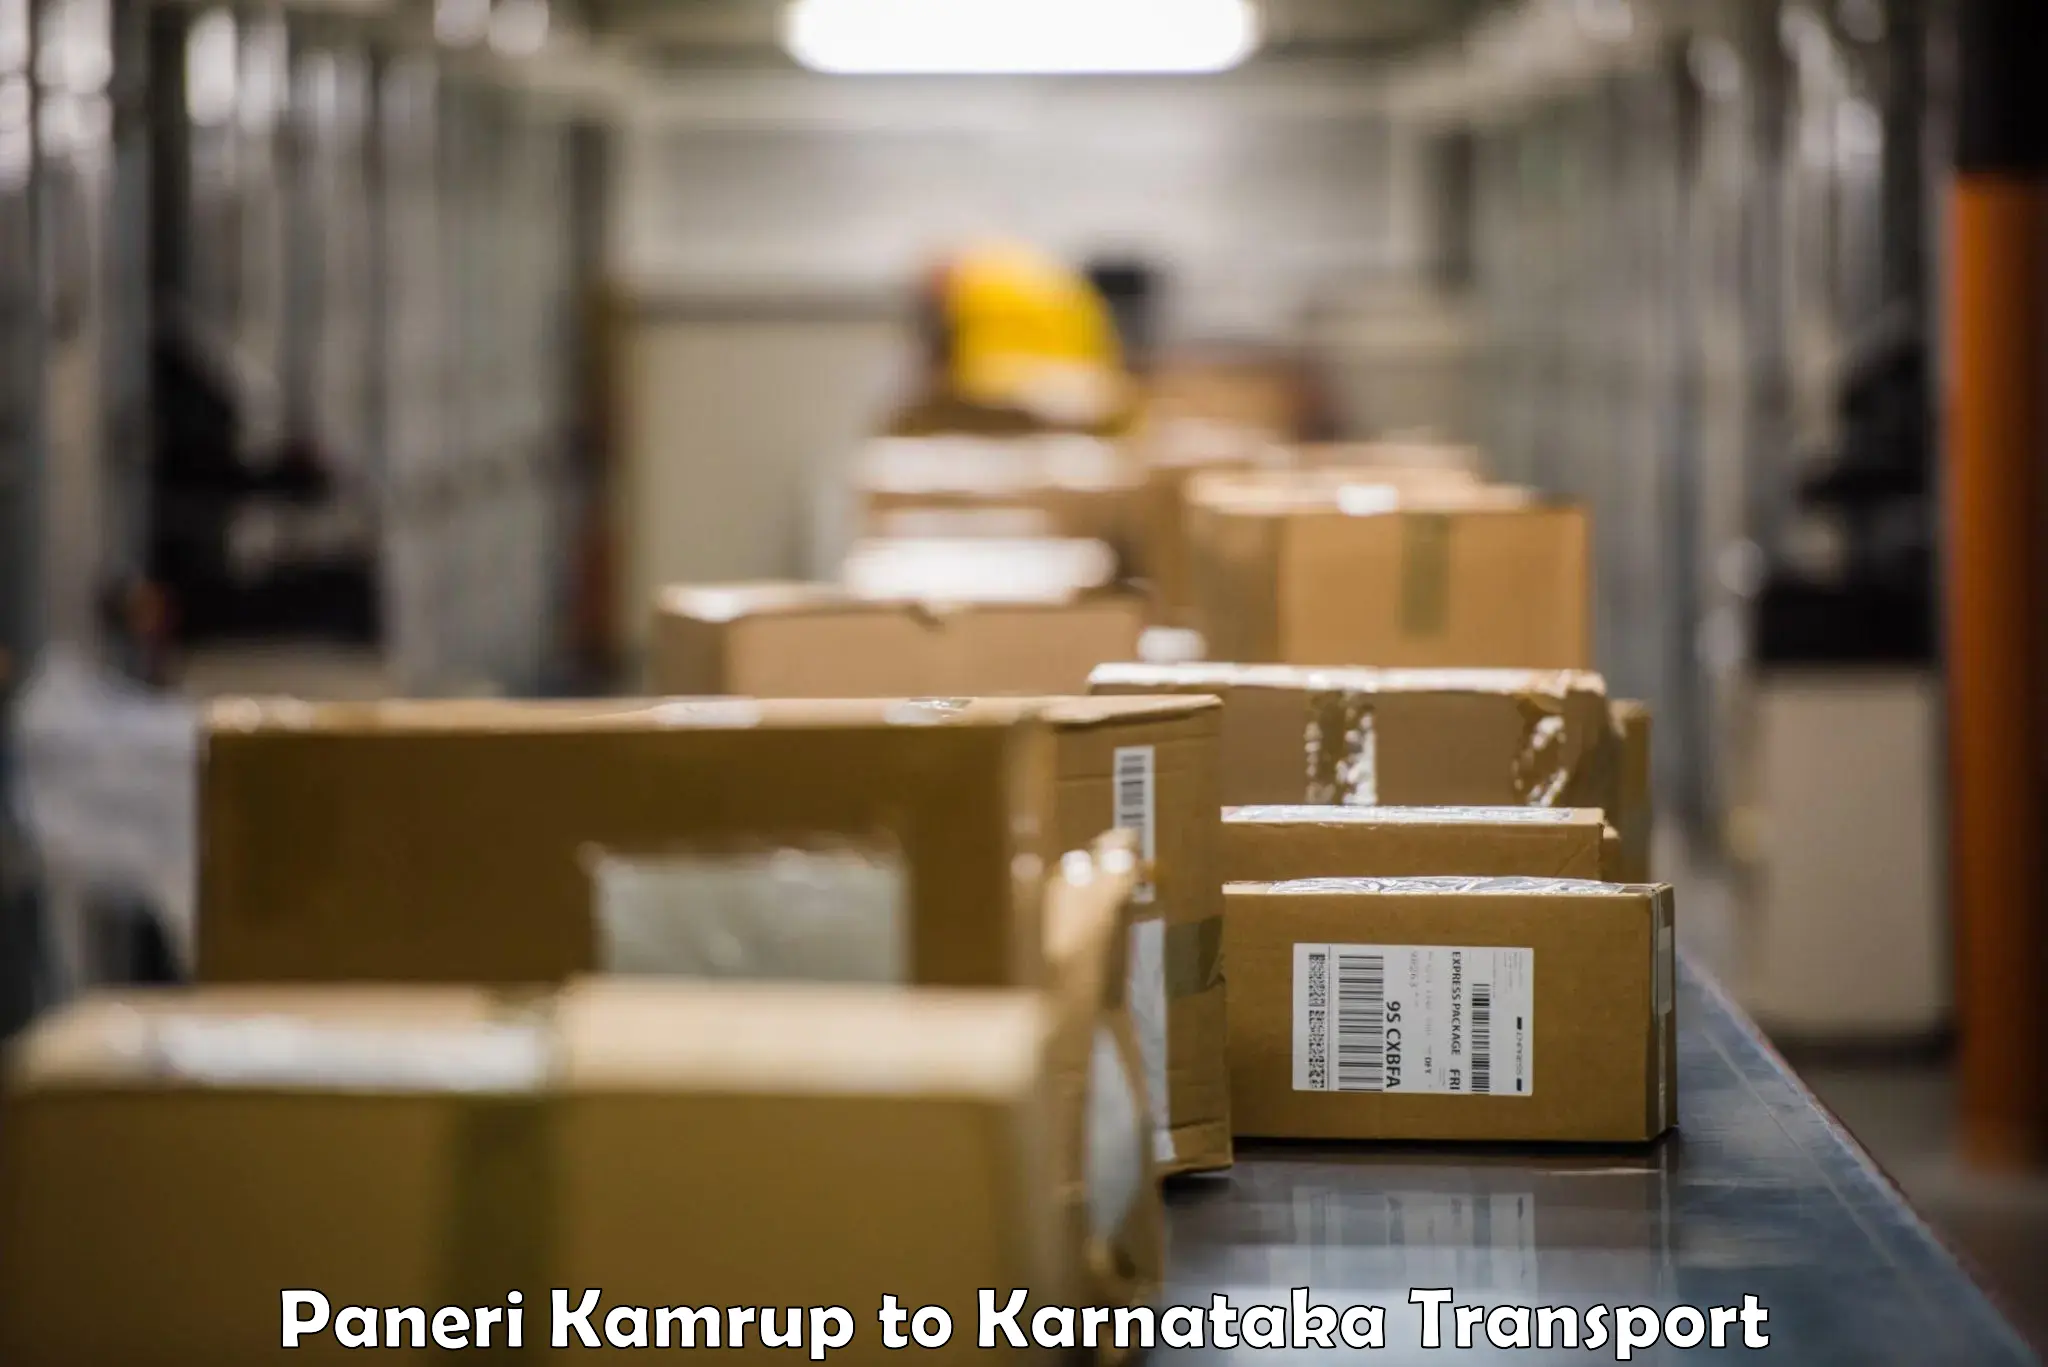 Truck transport companies in India Paneri Kamrup to Gurmatkal